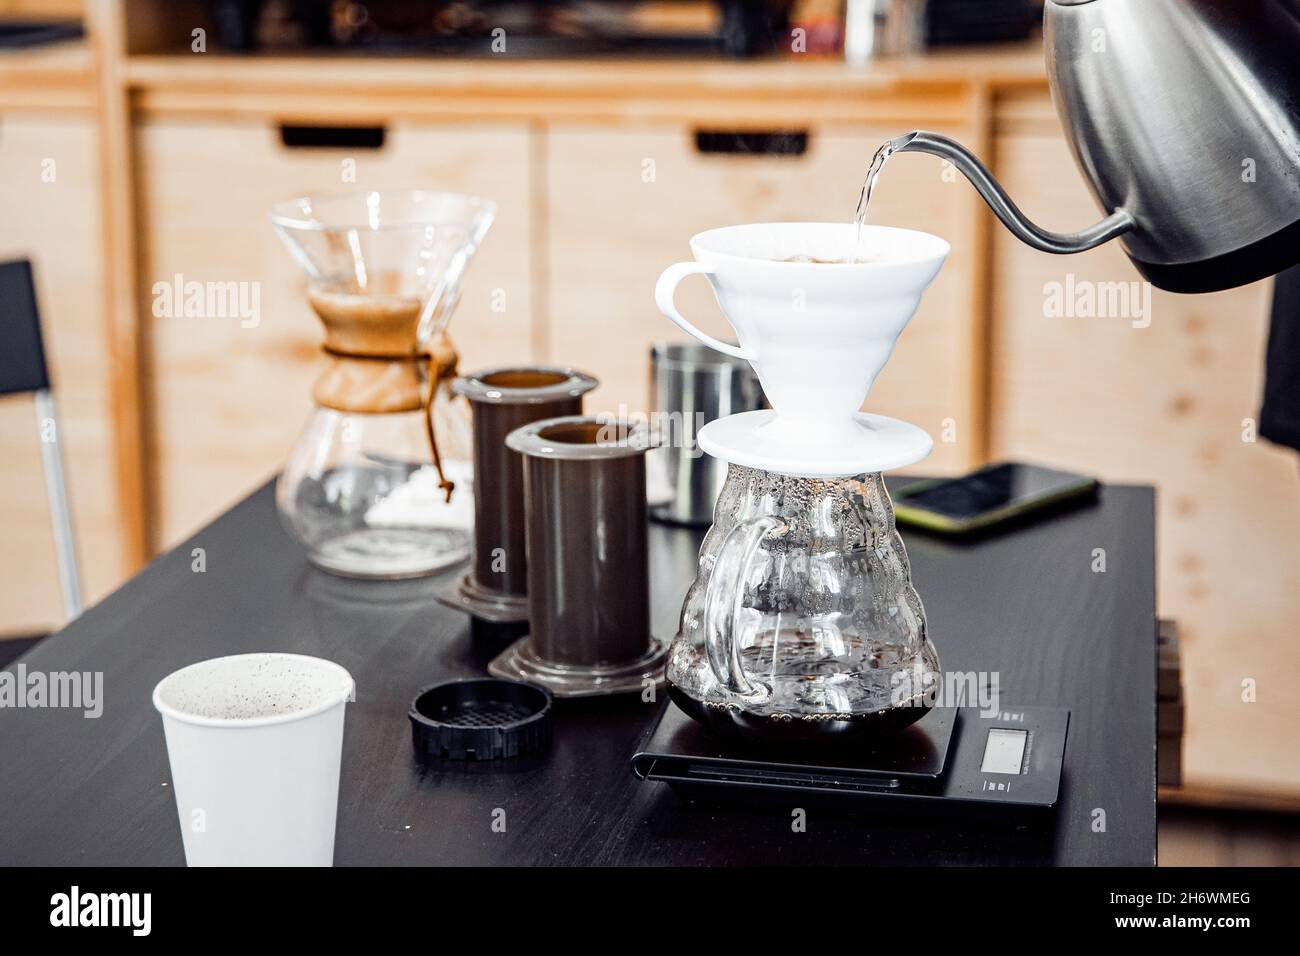 https://c8.alamy.com/comp/2H6WMEG/alternative-method-of-making-coffee-funnel-drip-glasses-with-paper-filter-chemex-pour-over-kettle-2H6WMEG.jpg